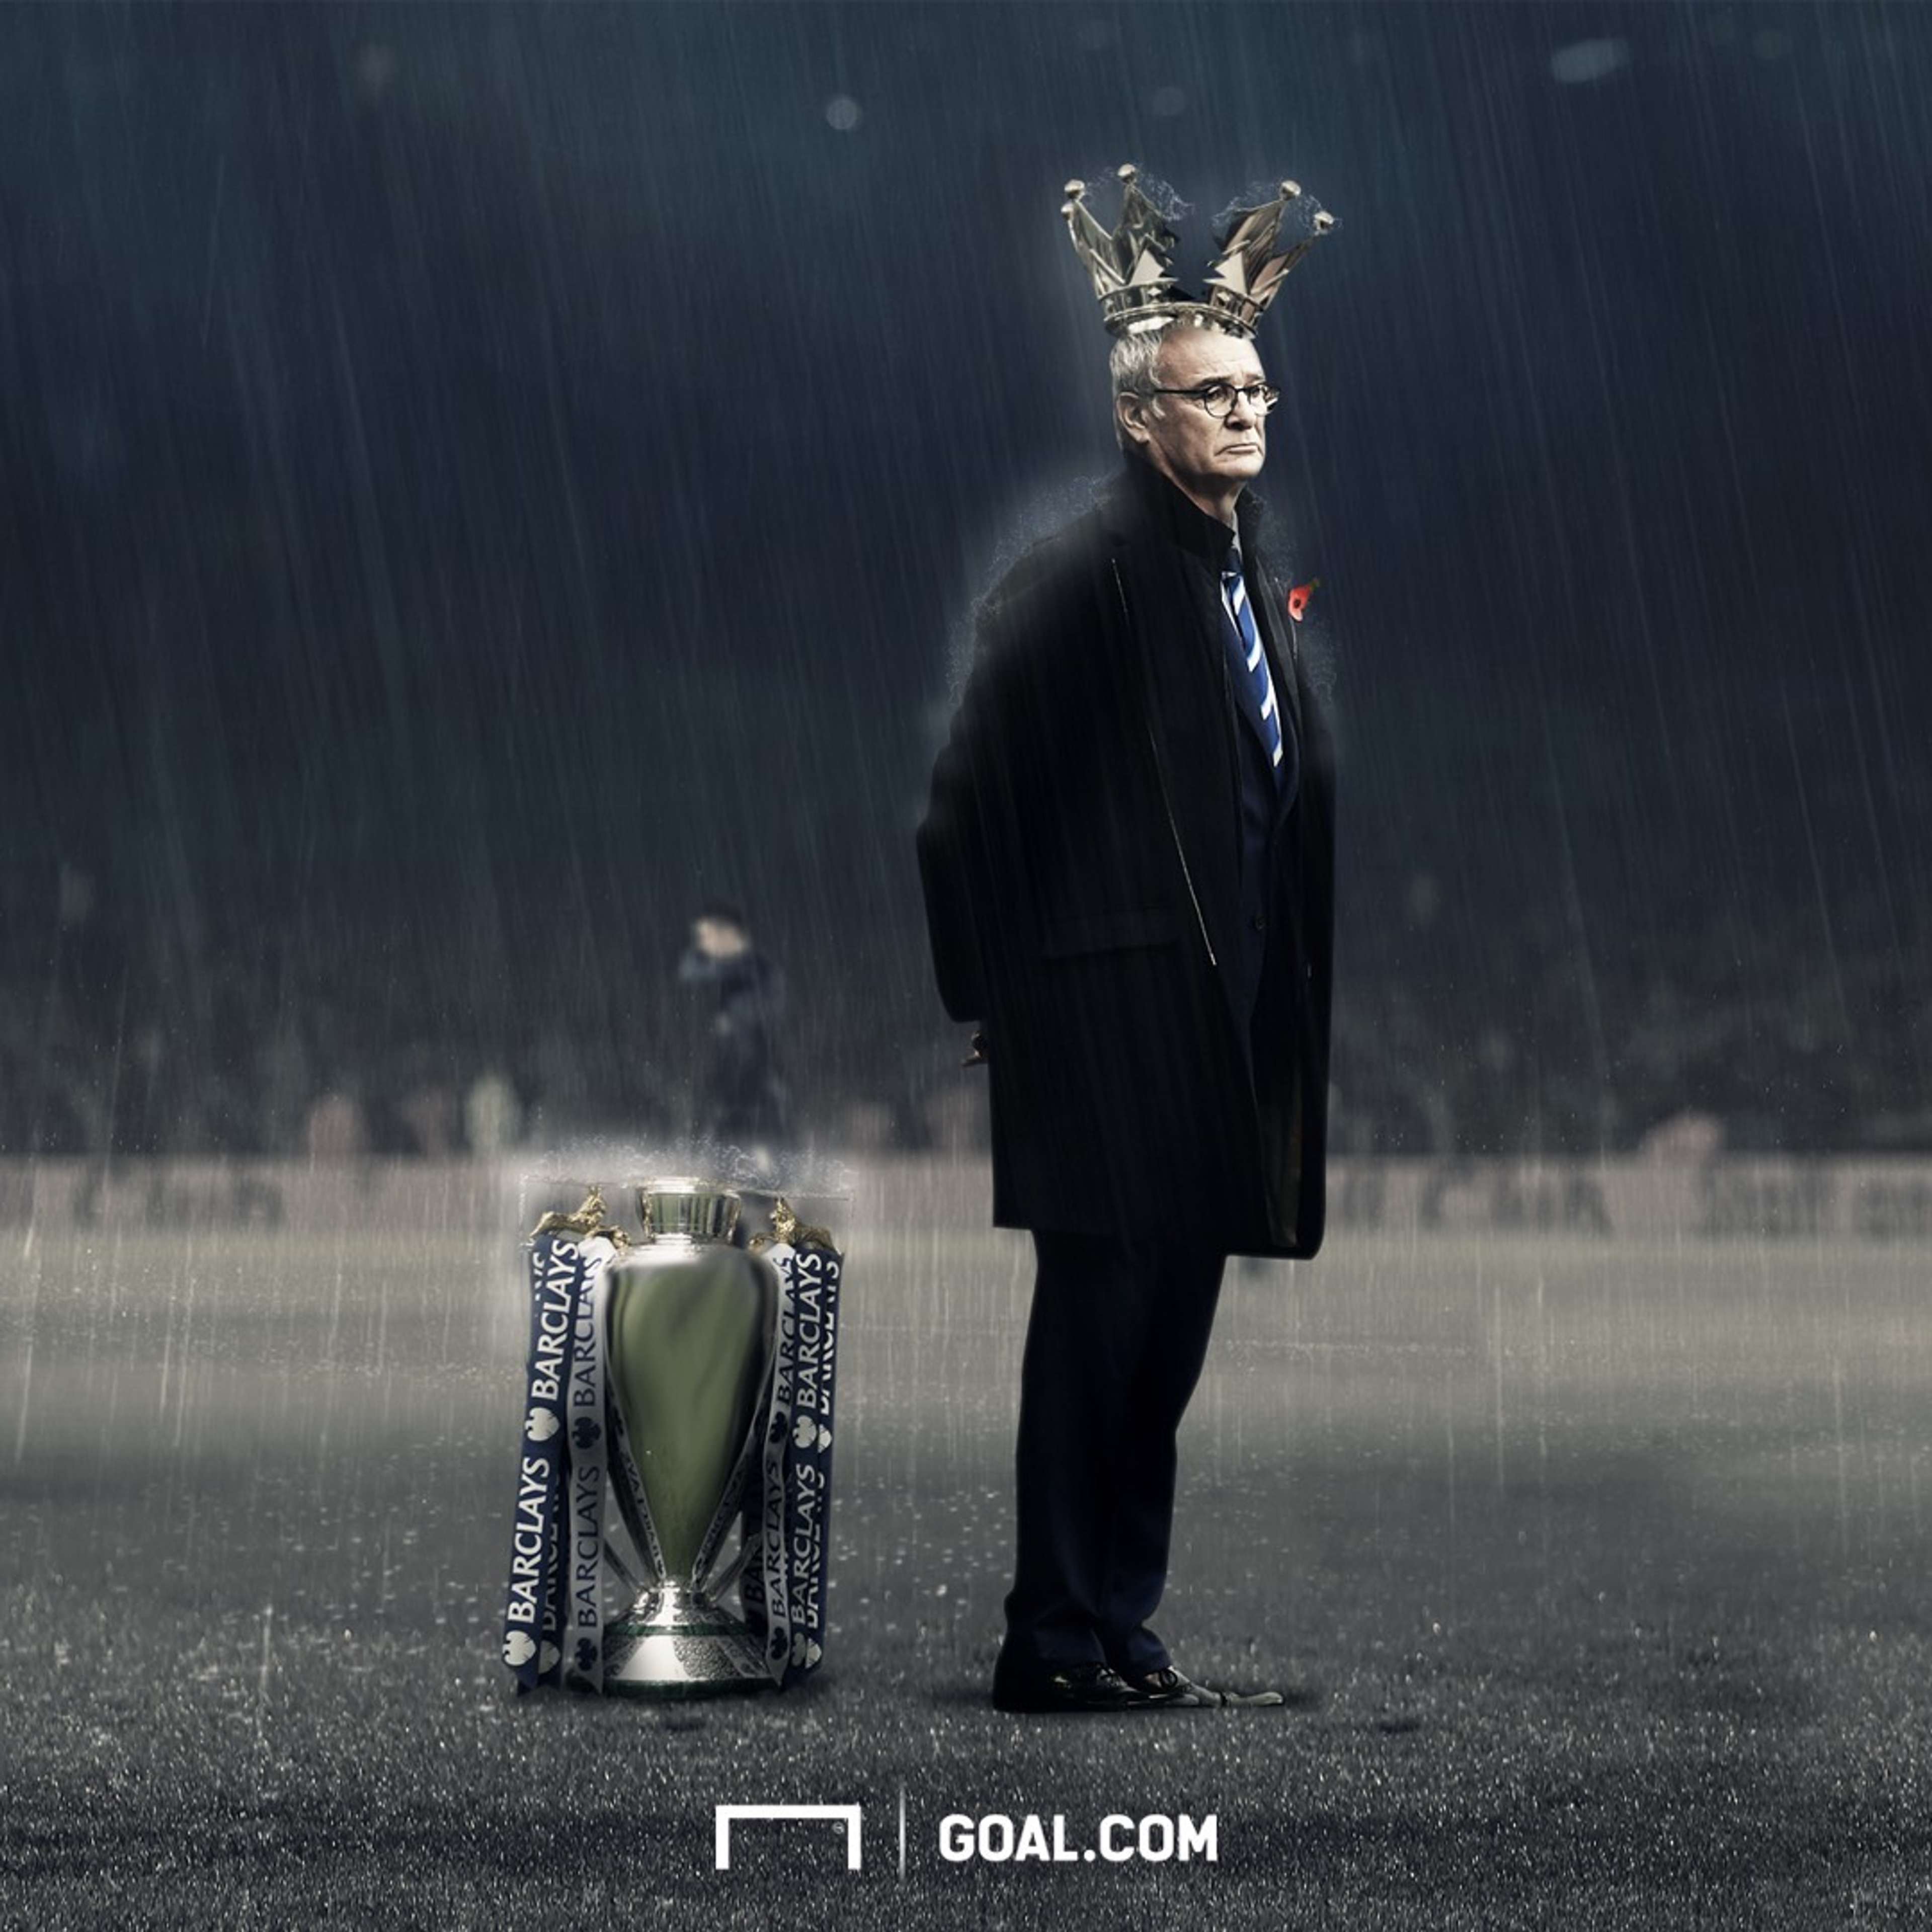 EMBED ONLY Claudio Ranieri